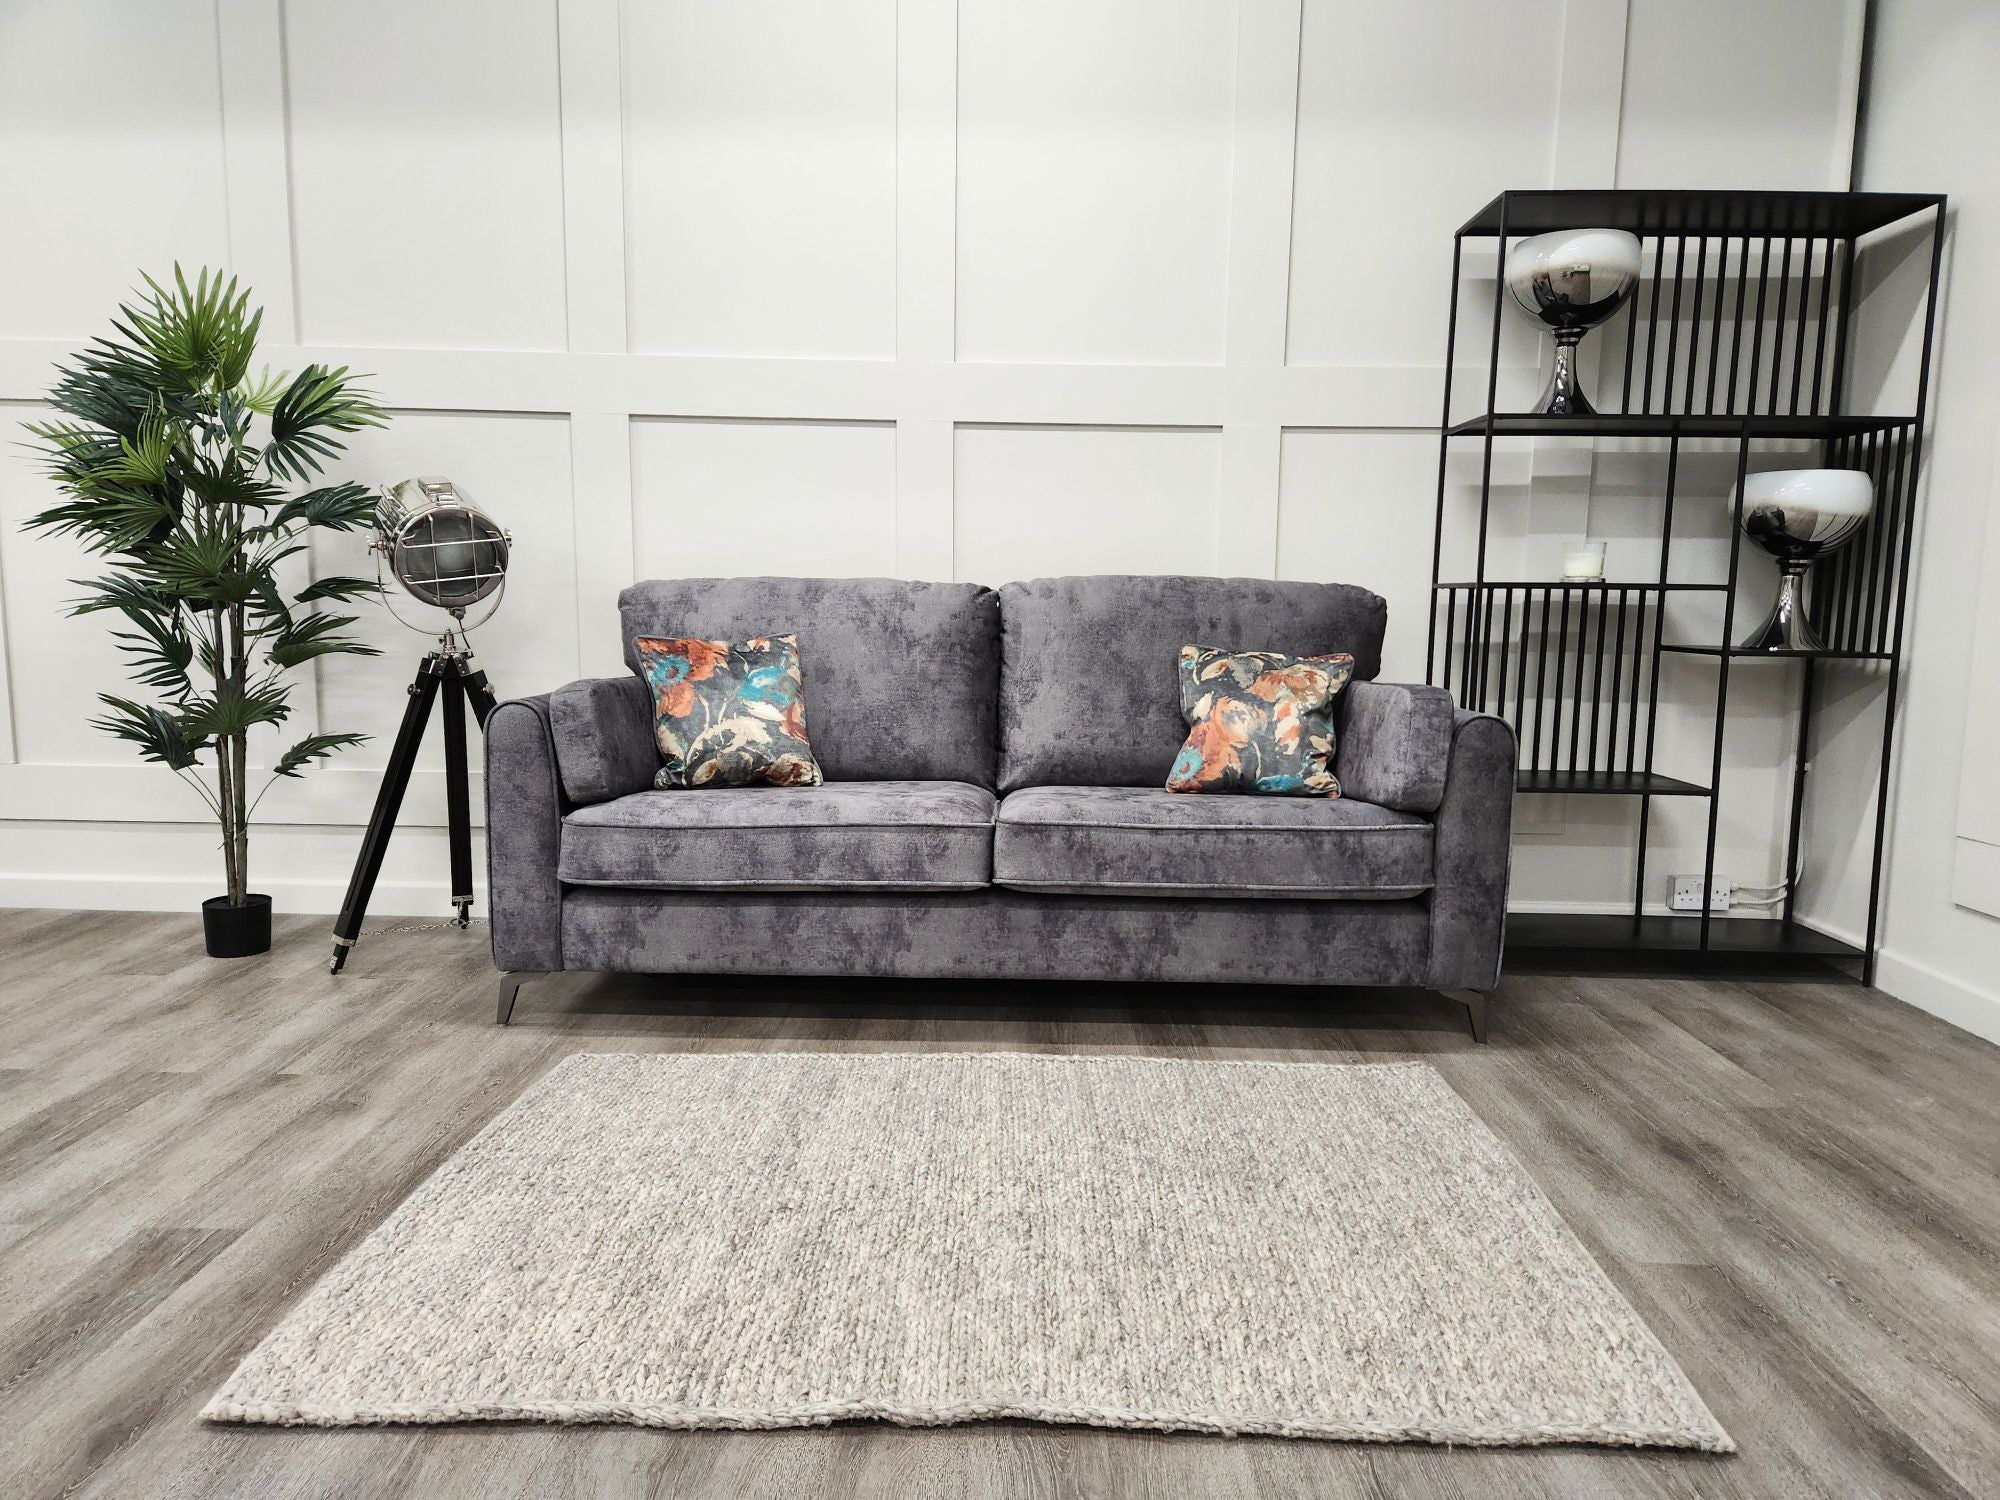 Grey 3 seater sofa oasis in room setting